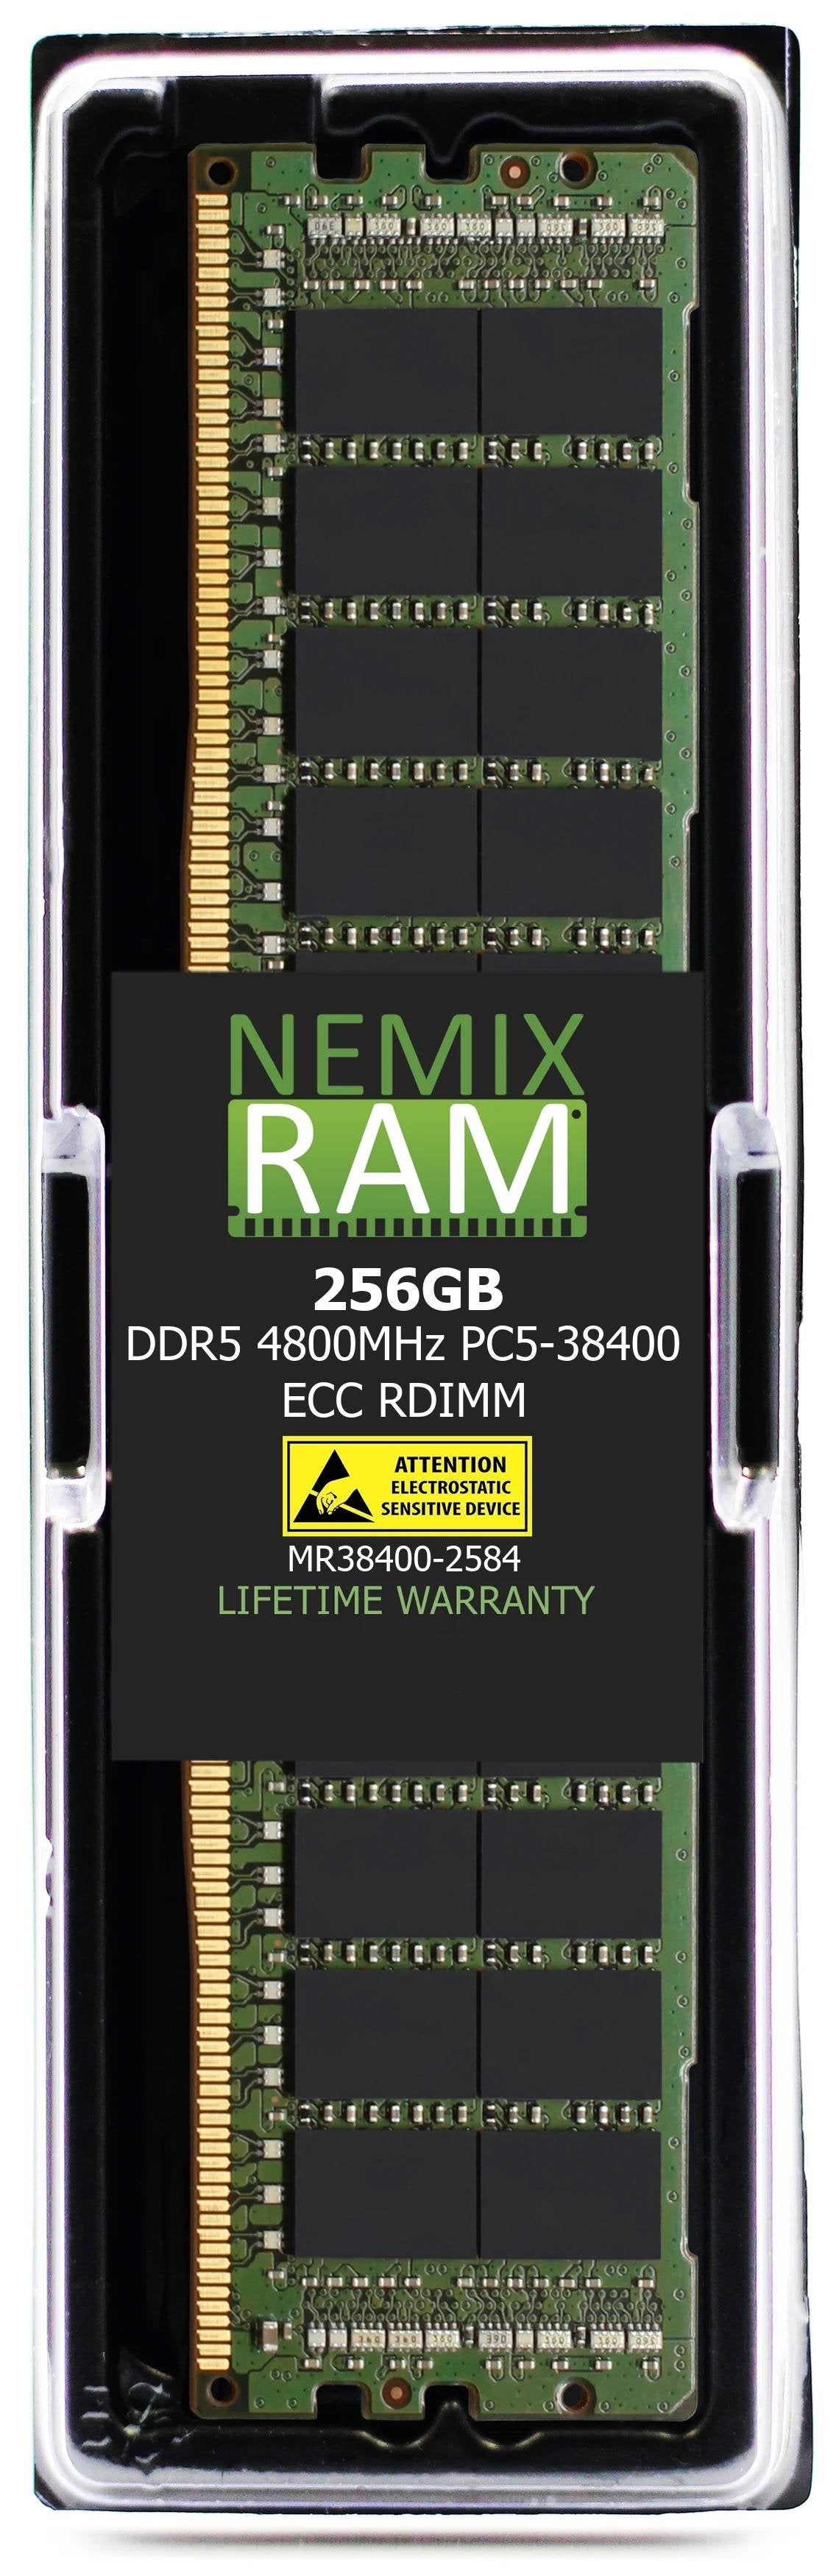 NEMIX RAM 256GB DDR5 4800MHz PC5-38400 ECC RDIMM Compatible with Hynix HMCT14MEERA144N